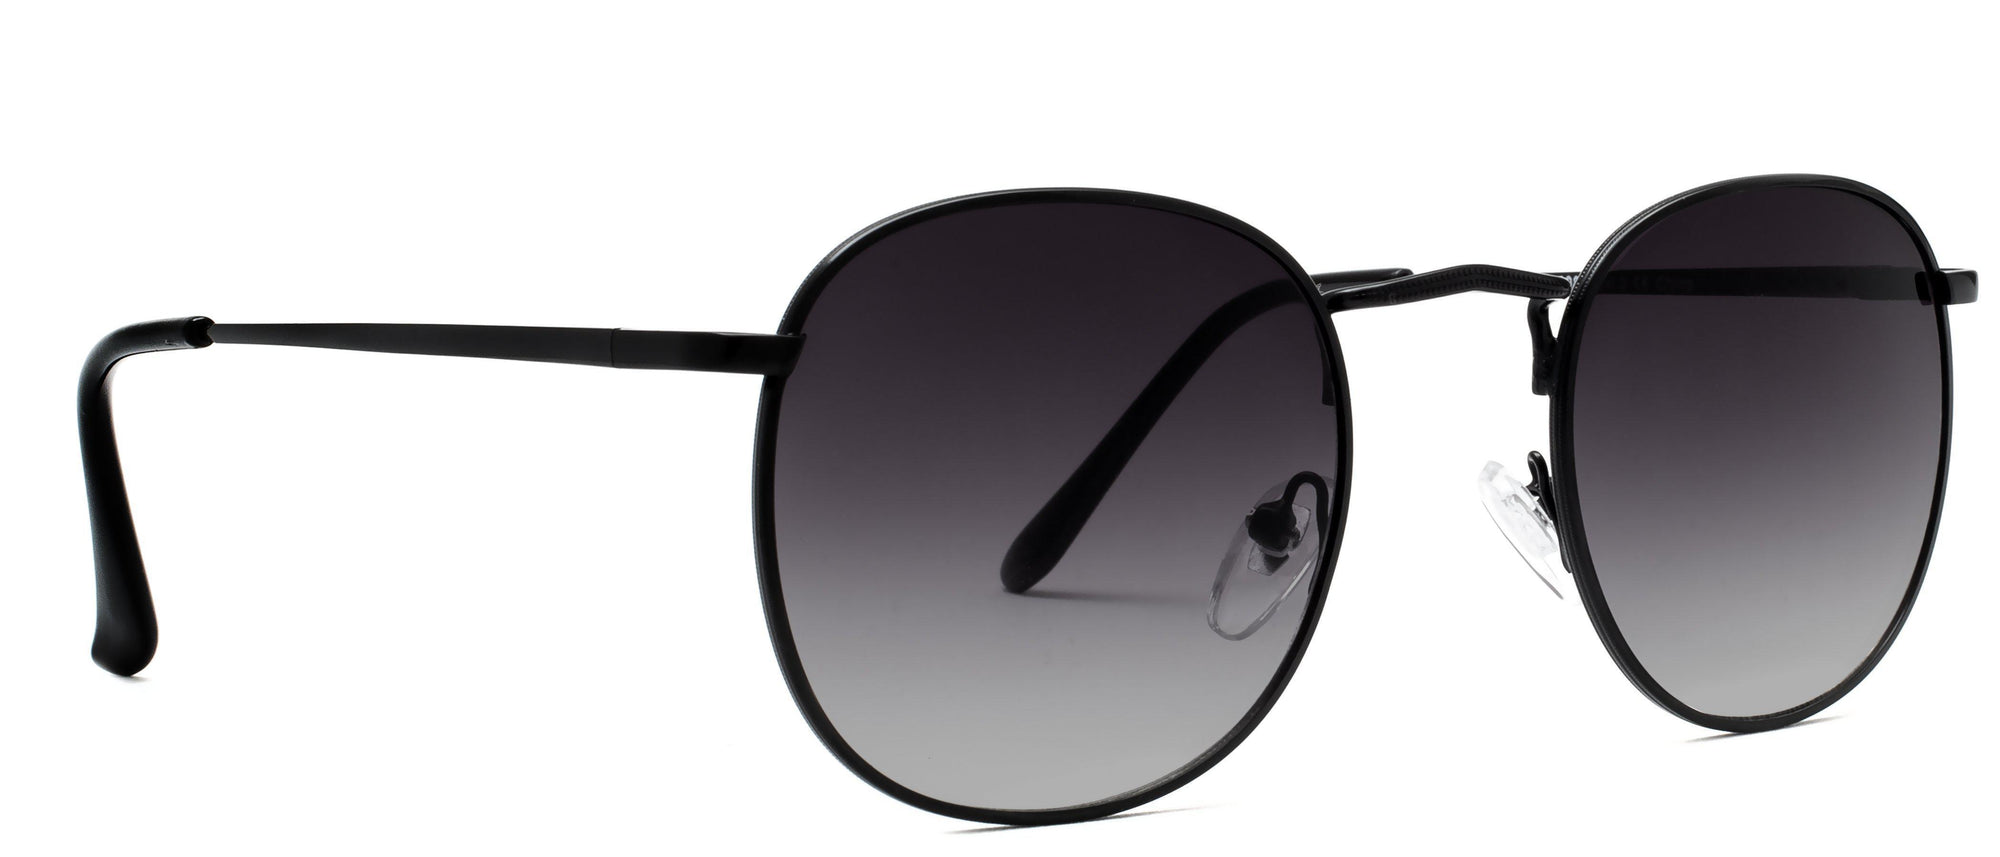 Elton Street - Sunglasses NYS Collection Eyewear